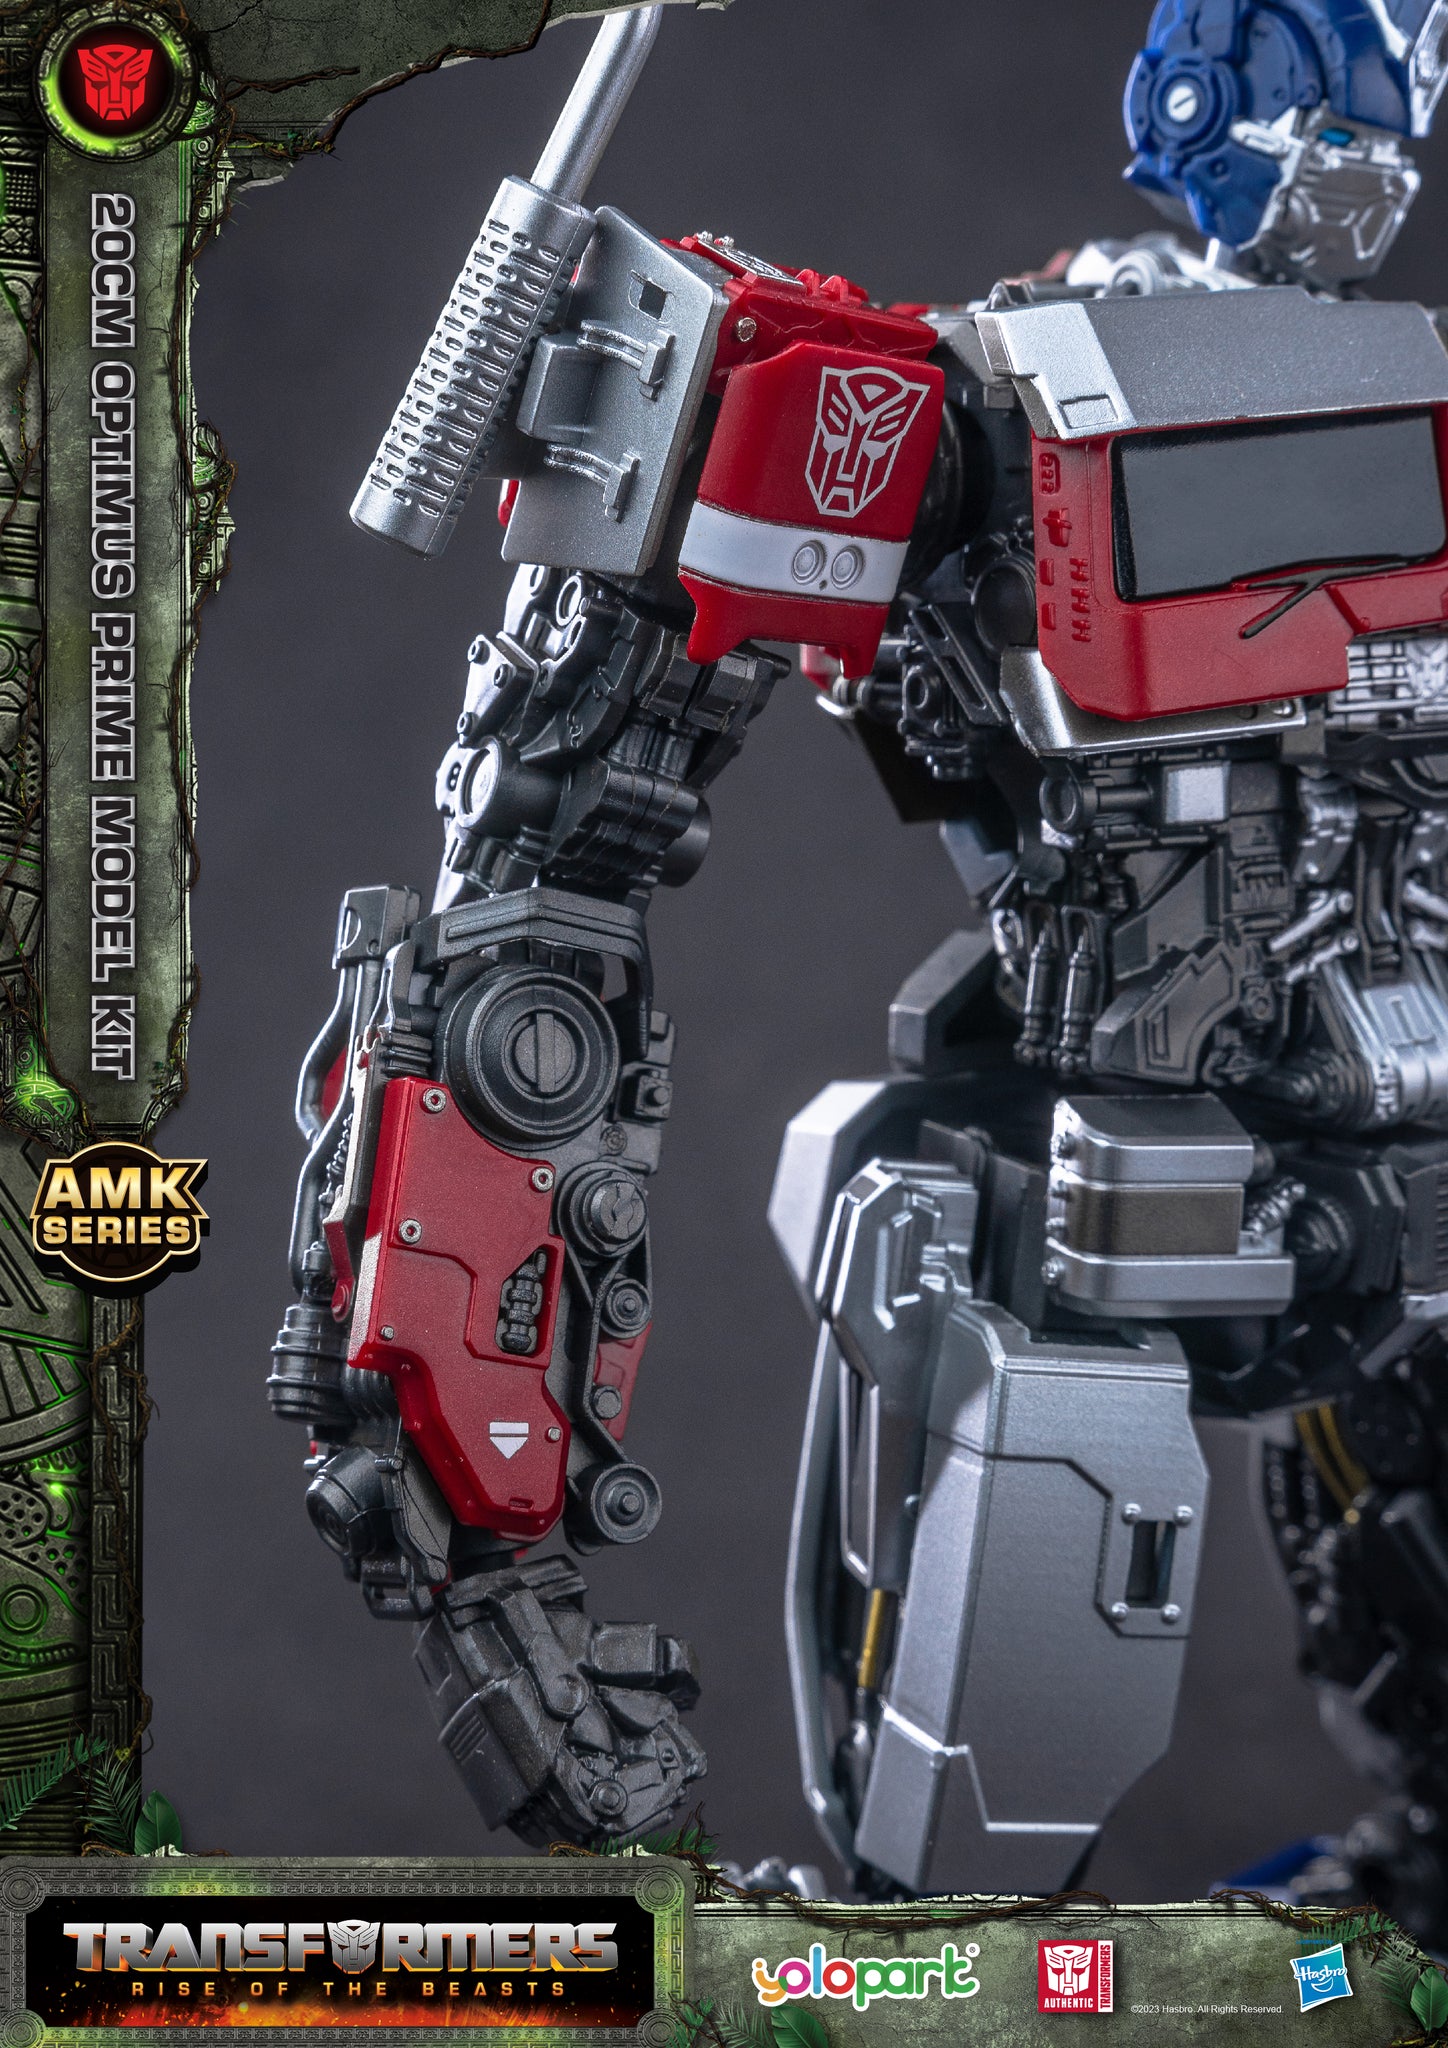 yolopark reveals 2 DOTM Model kit prototypes of Optimus Prime and Megatron  : r/transformers